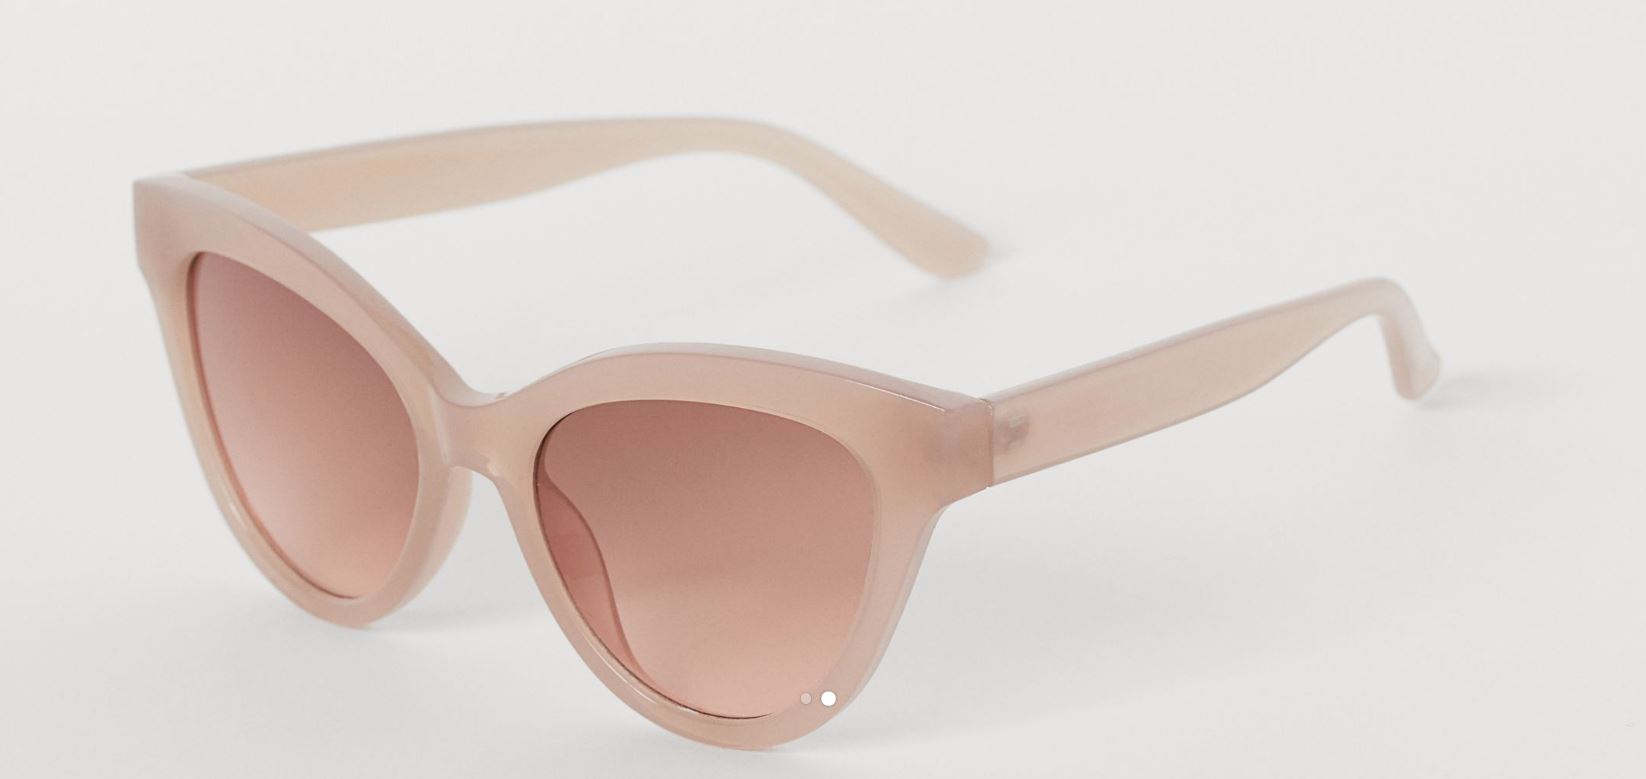 Cateye solbriller